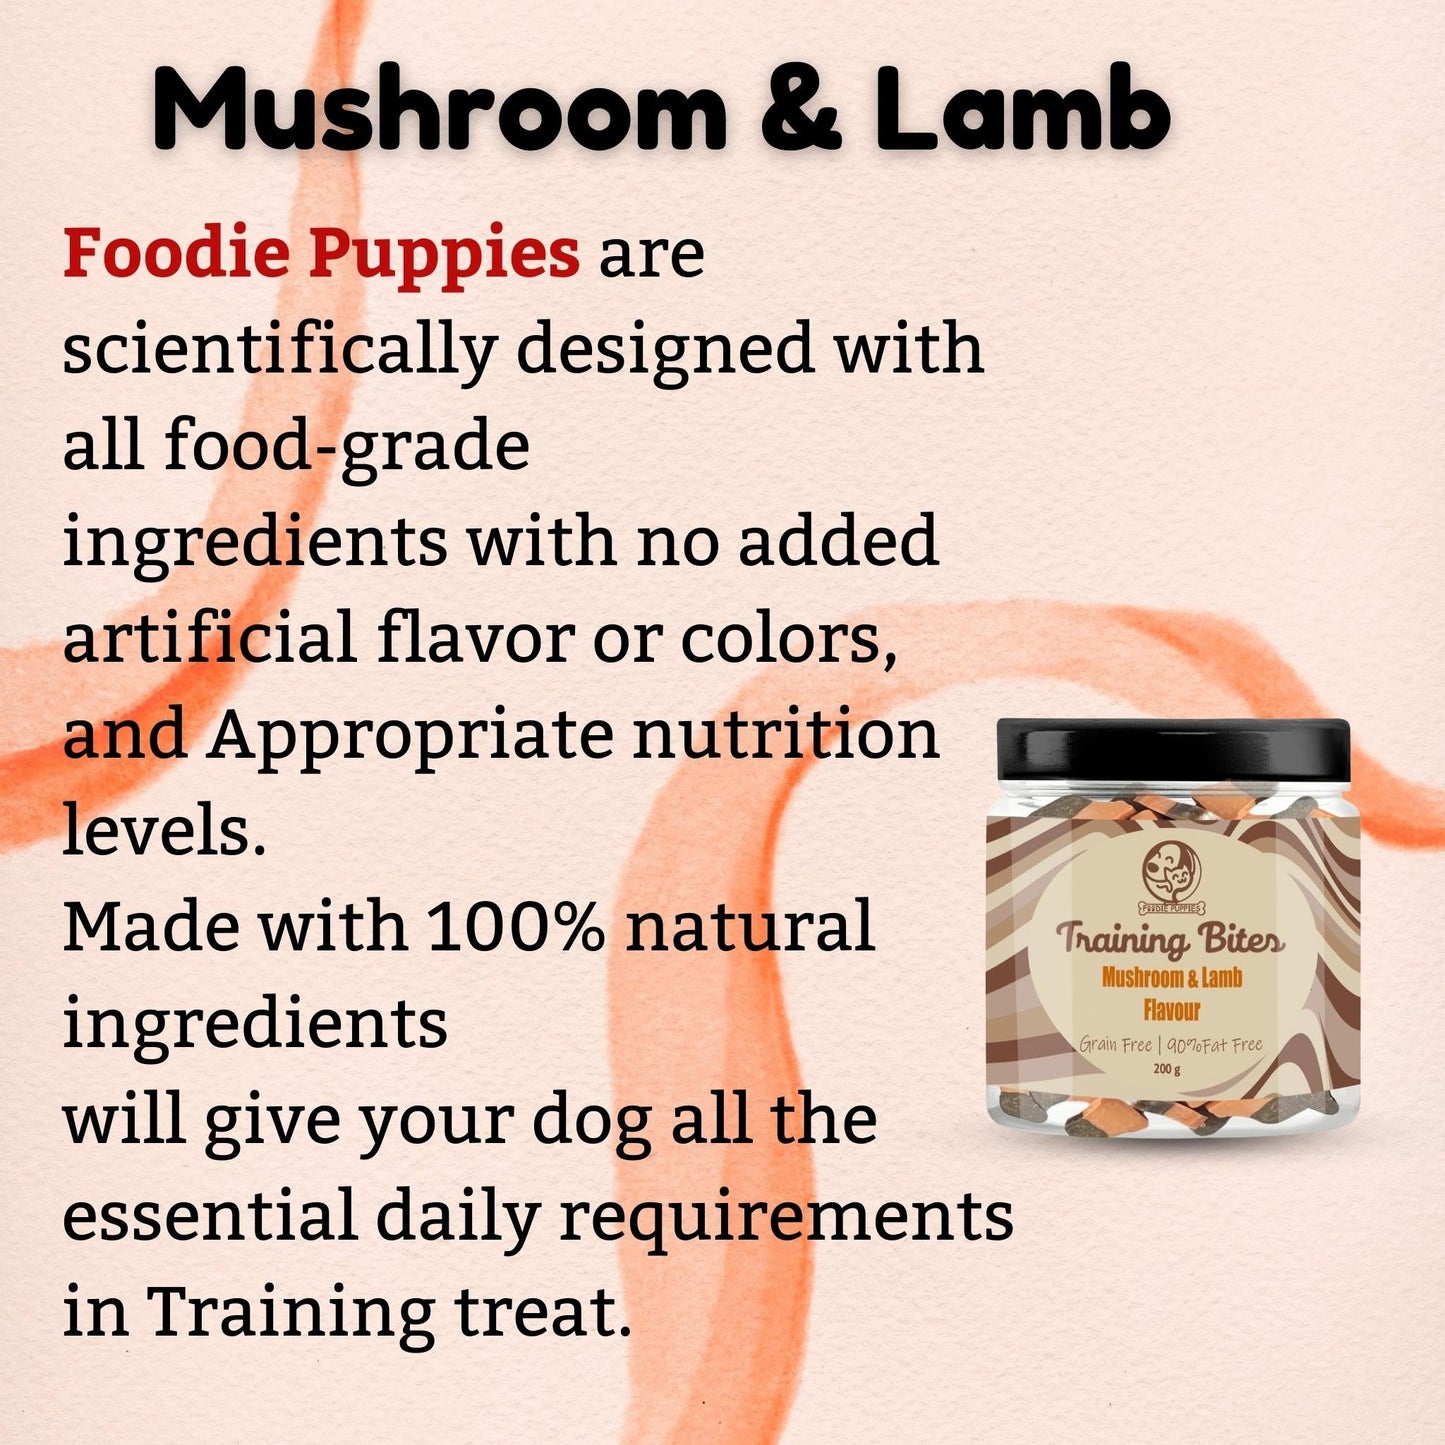 Foodie Puppies Mushroom & Lamb Bone Dog Training Bites - 210g, Pack of 2